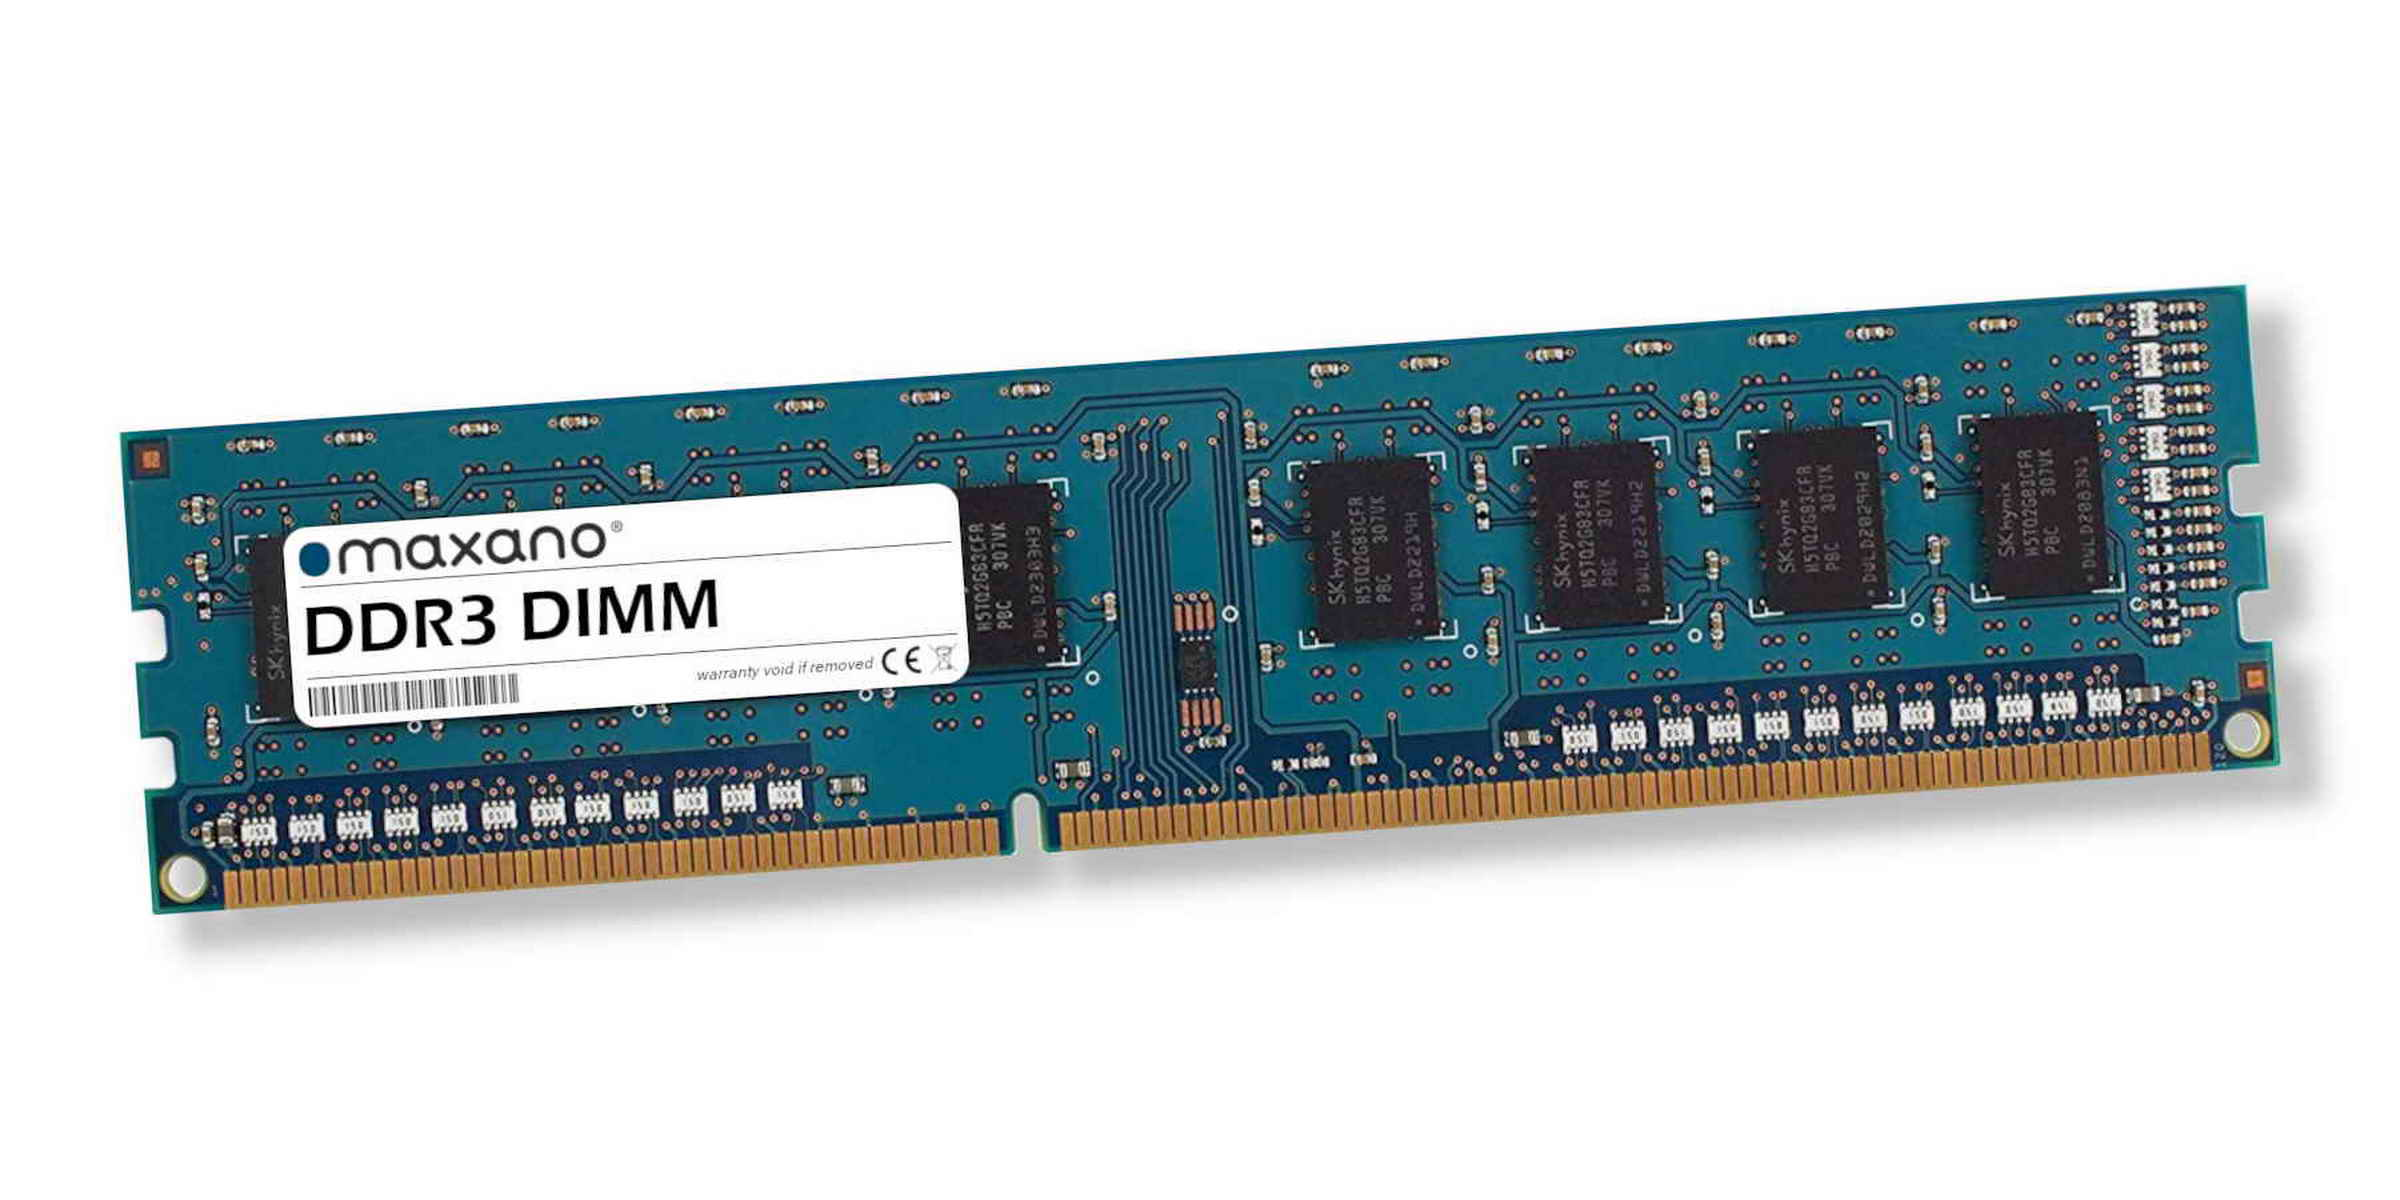 GB Arbeitsspeicher 8GB für SDRAM Medion E1101D DIMM) Akoya 8 MAXANO RAM (PC3-12800